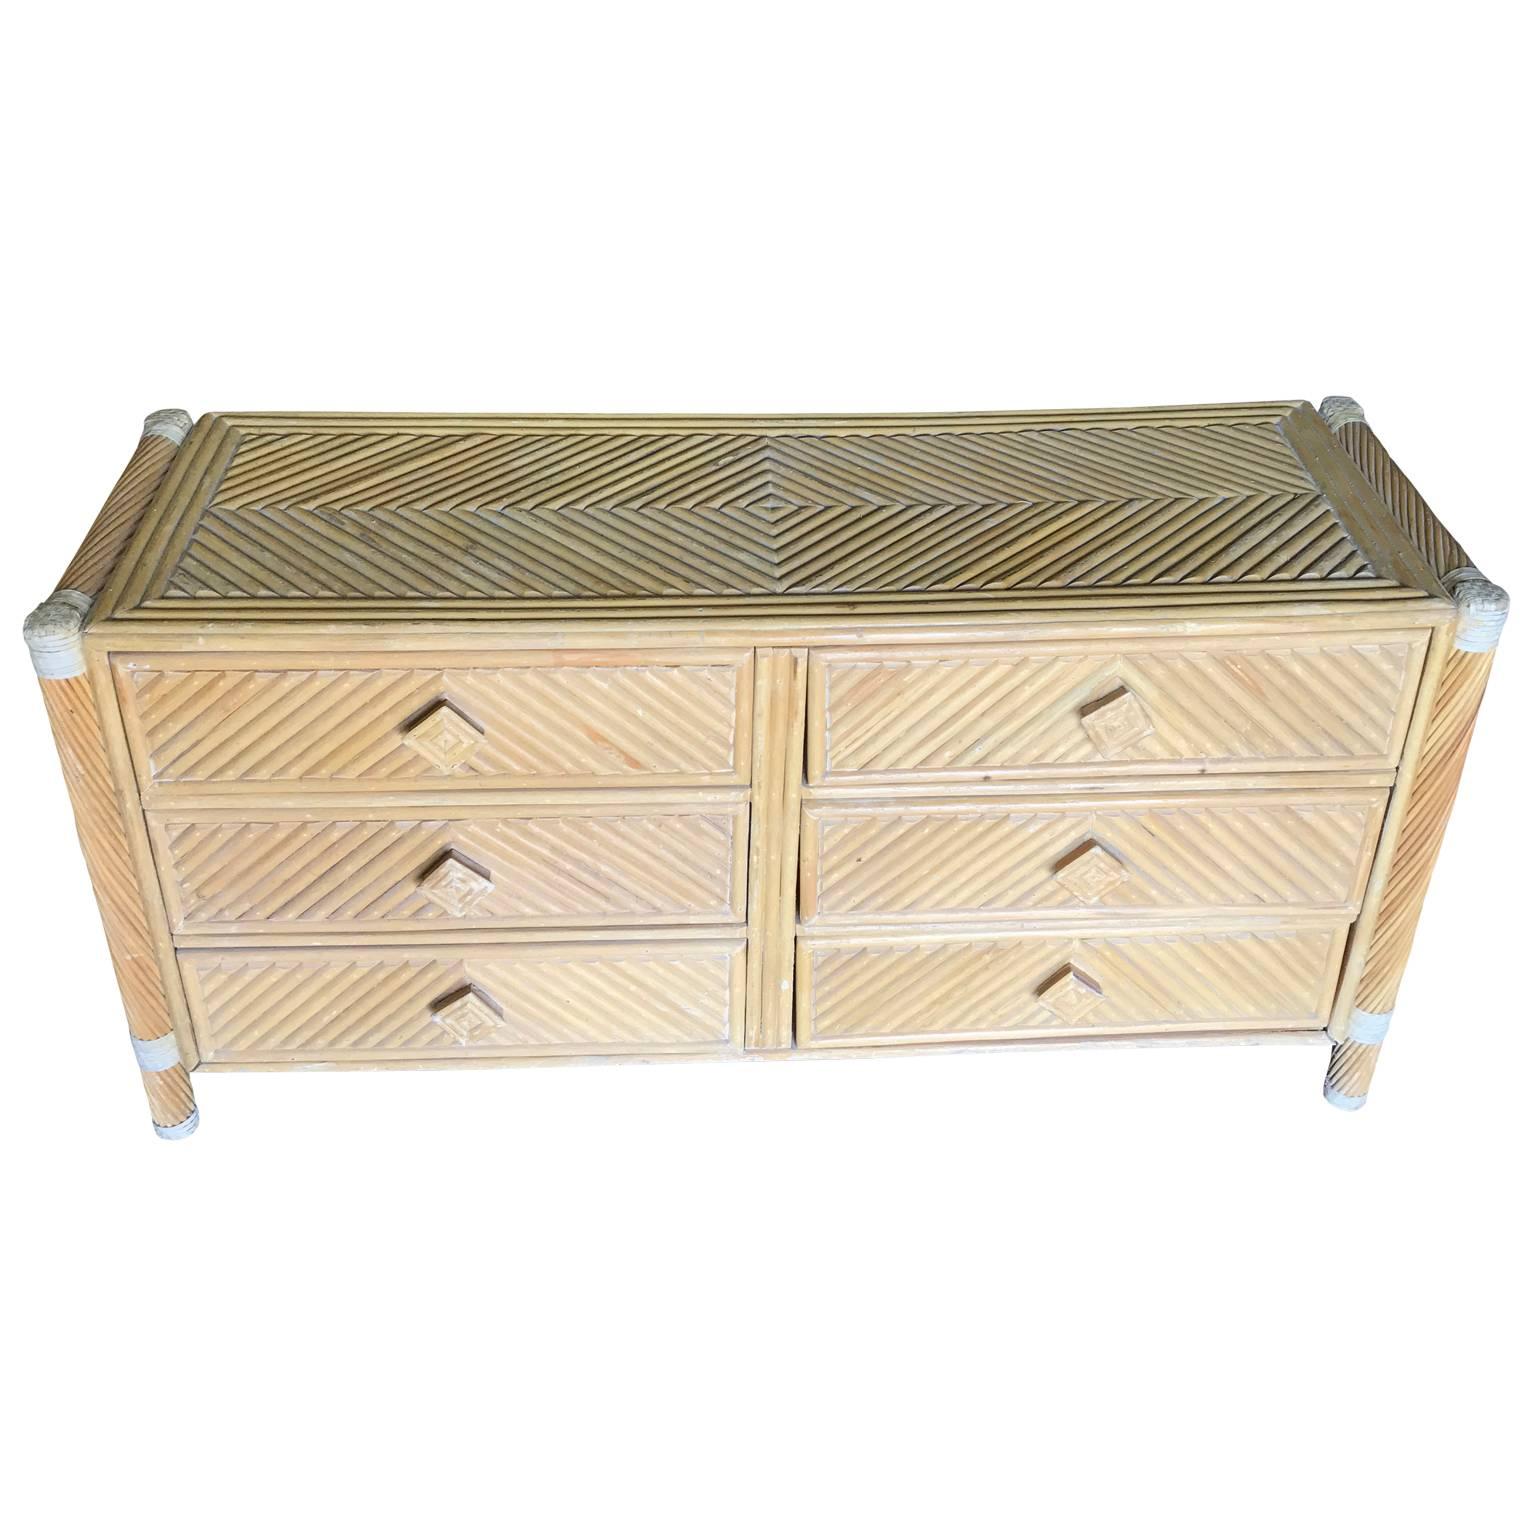 Six drawer dresser in pencil reed rattan in geometric pattern.